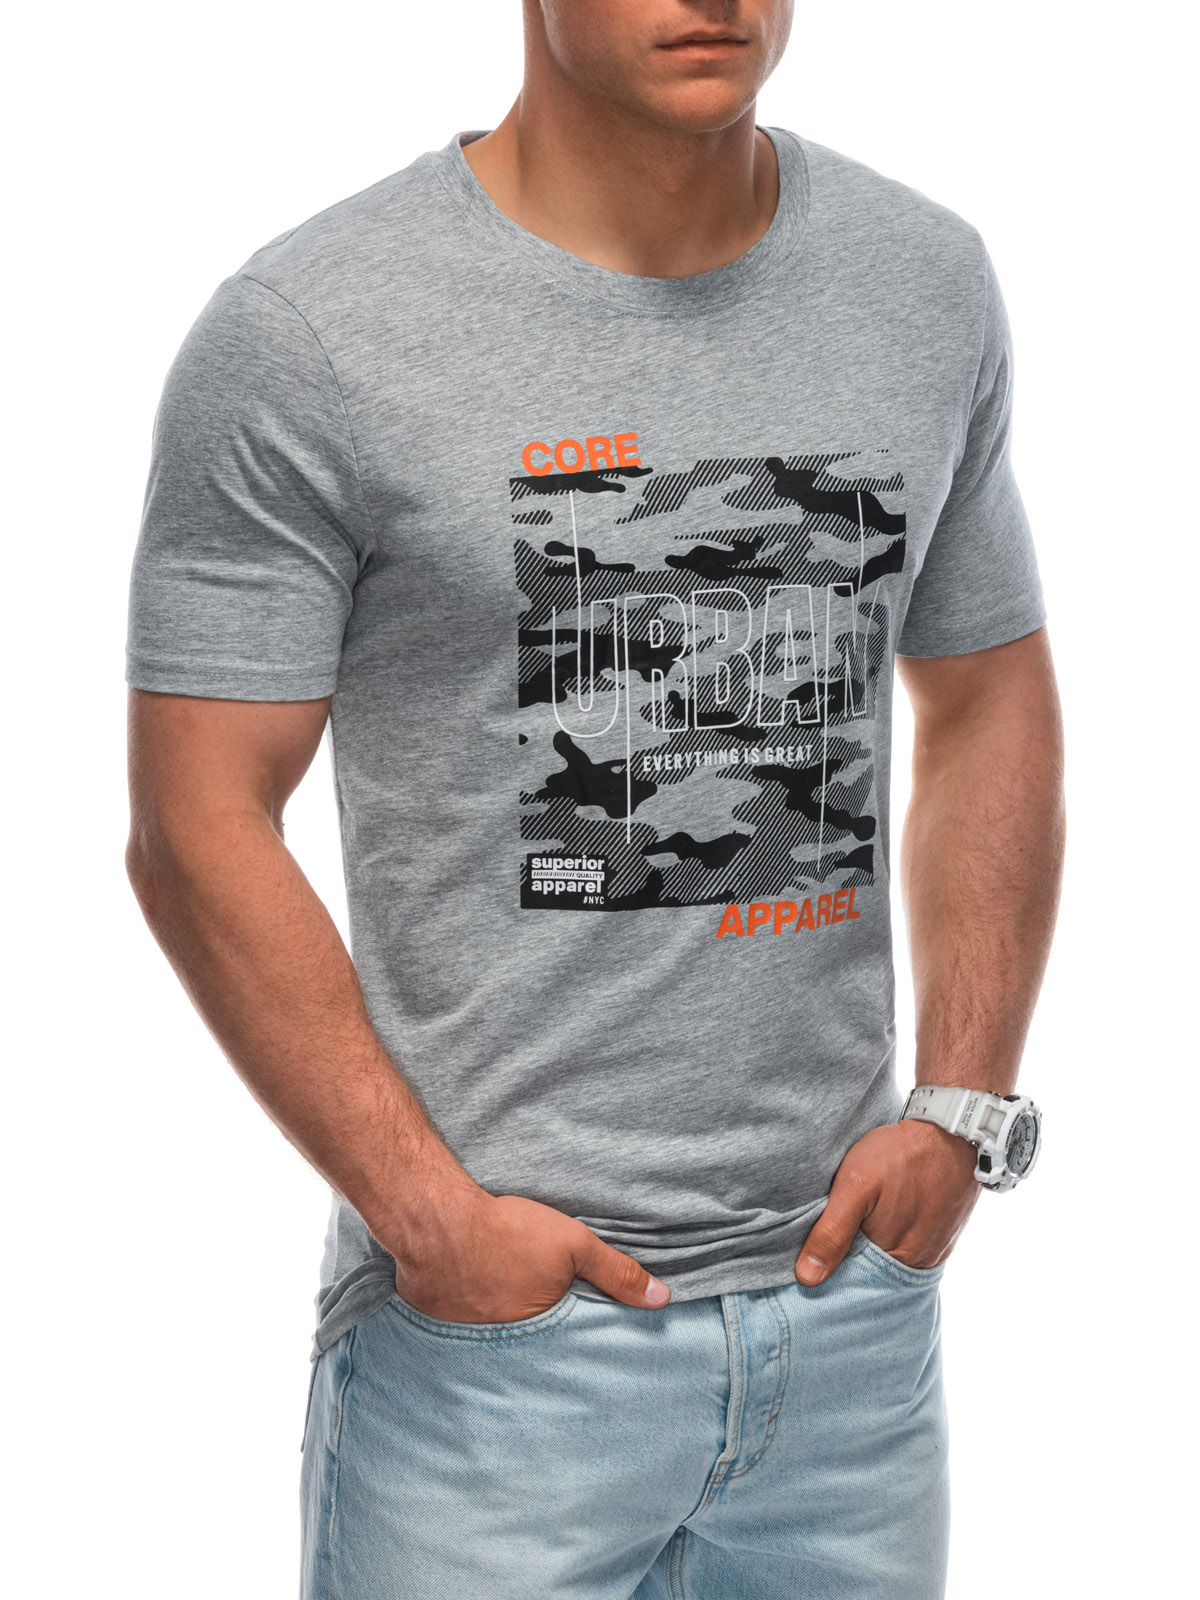 Edoti Men's printed t-shirt